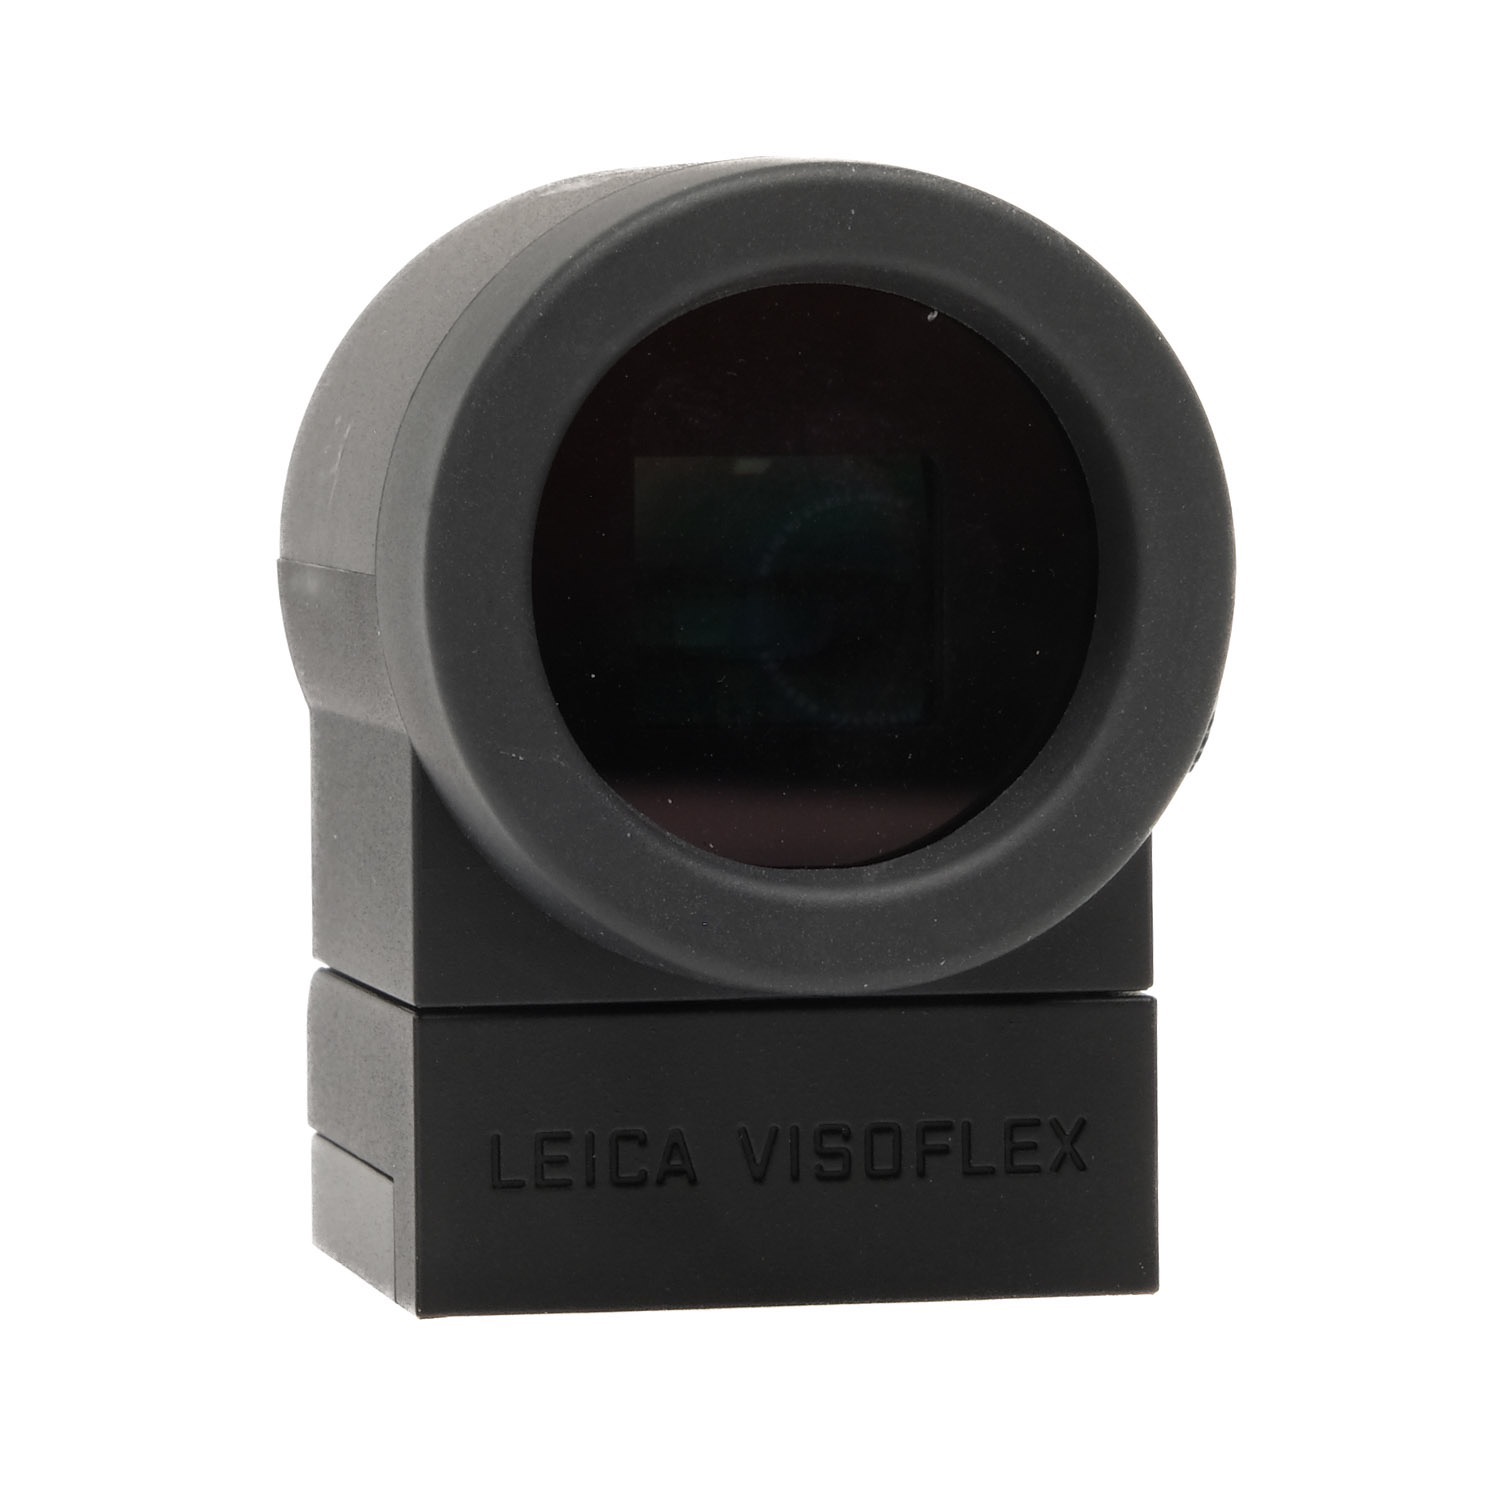 Leica Visoflex 020, Boxed PA029015